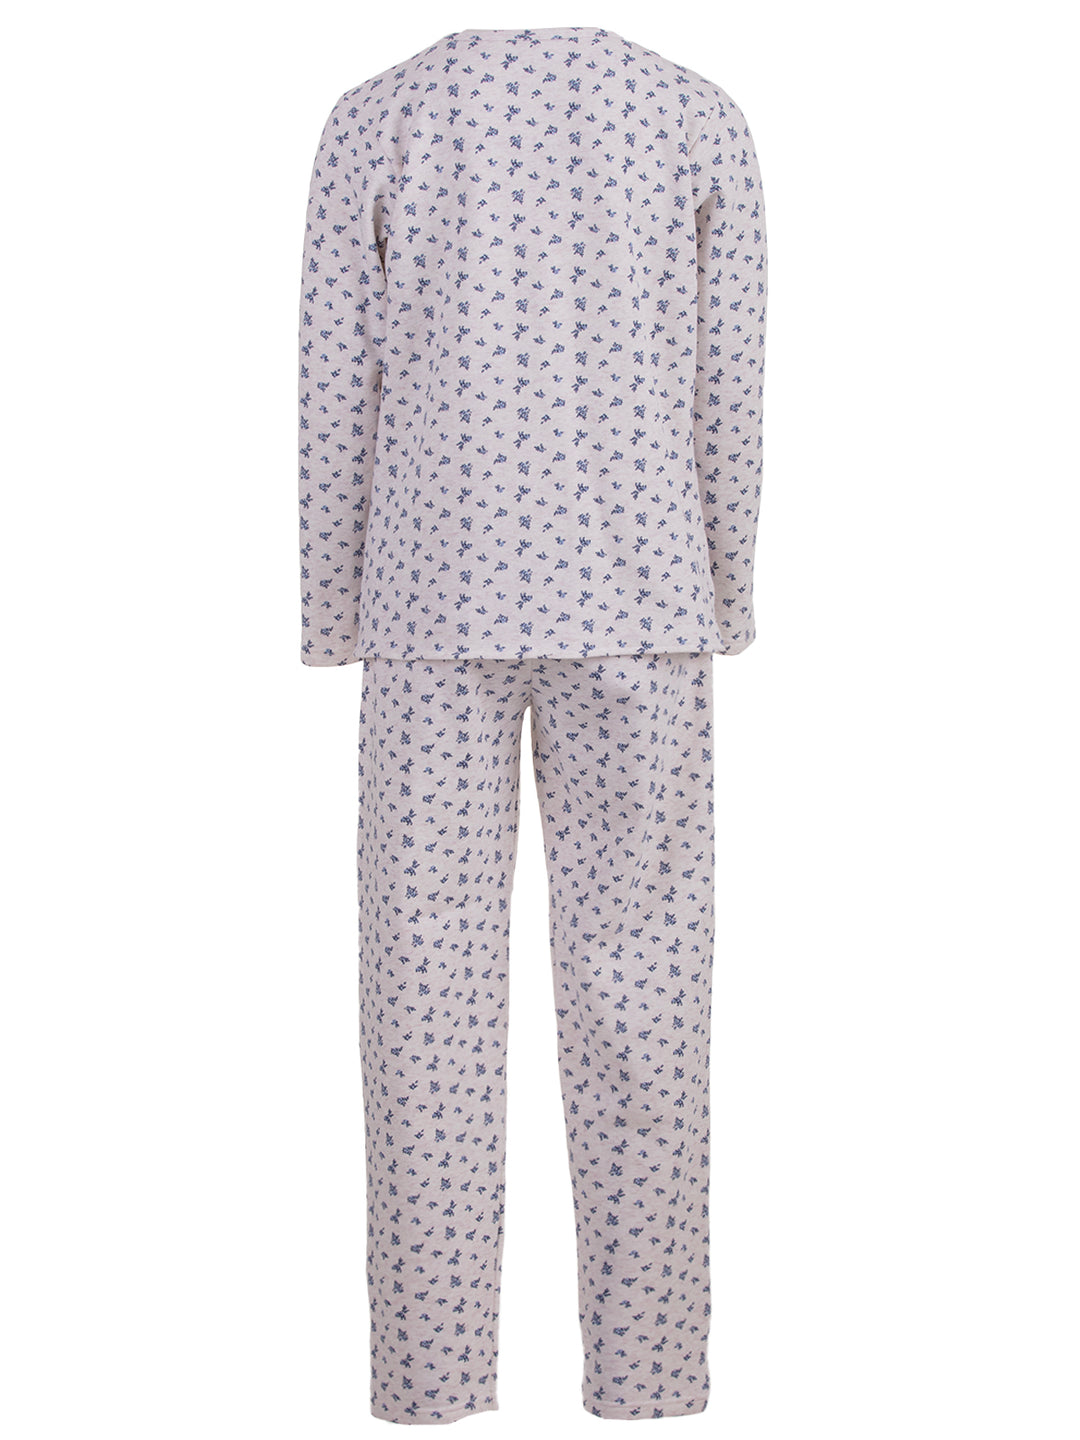 Pyjama Set Thermo - Blumen blau